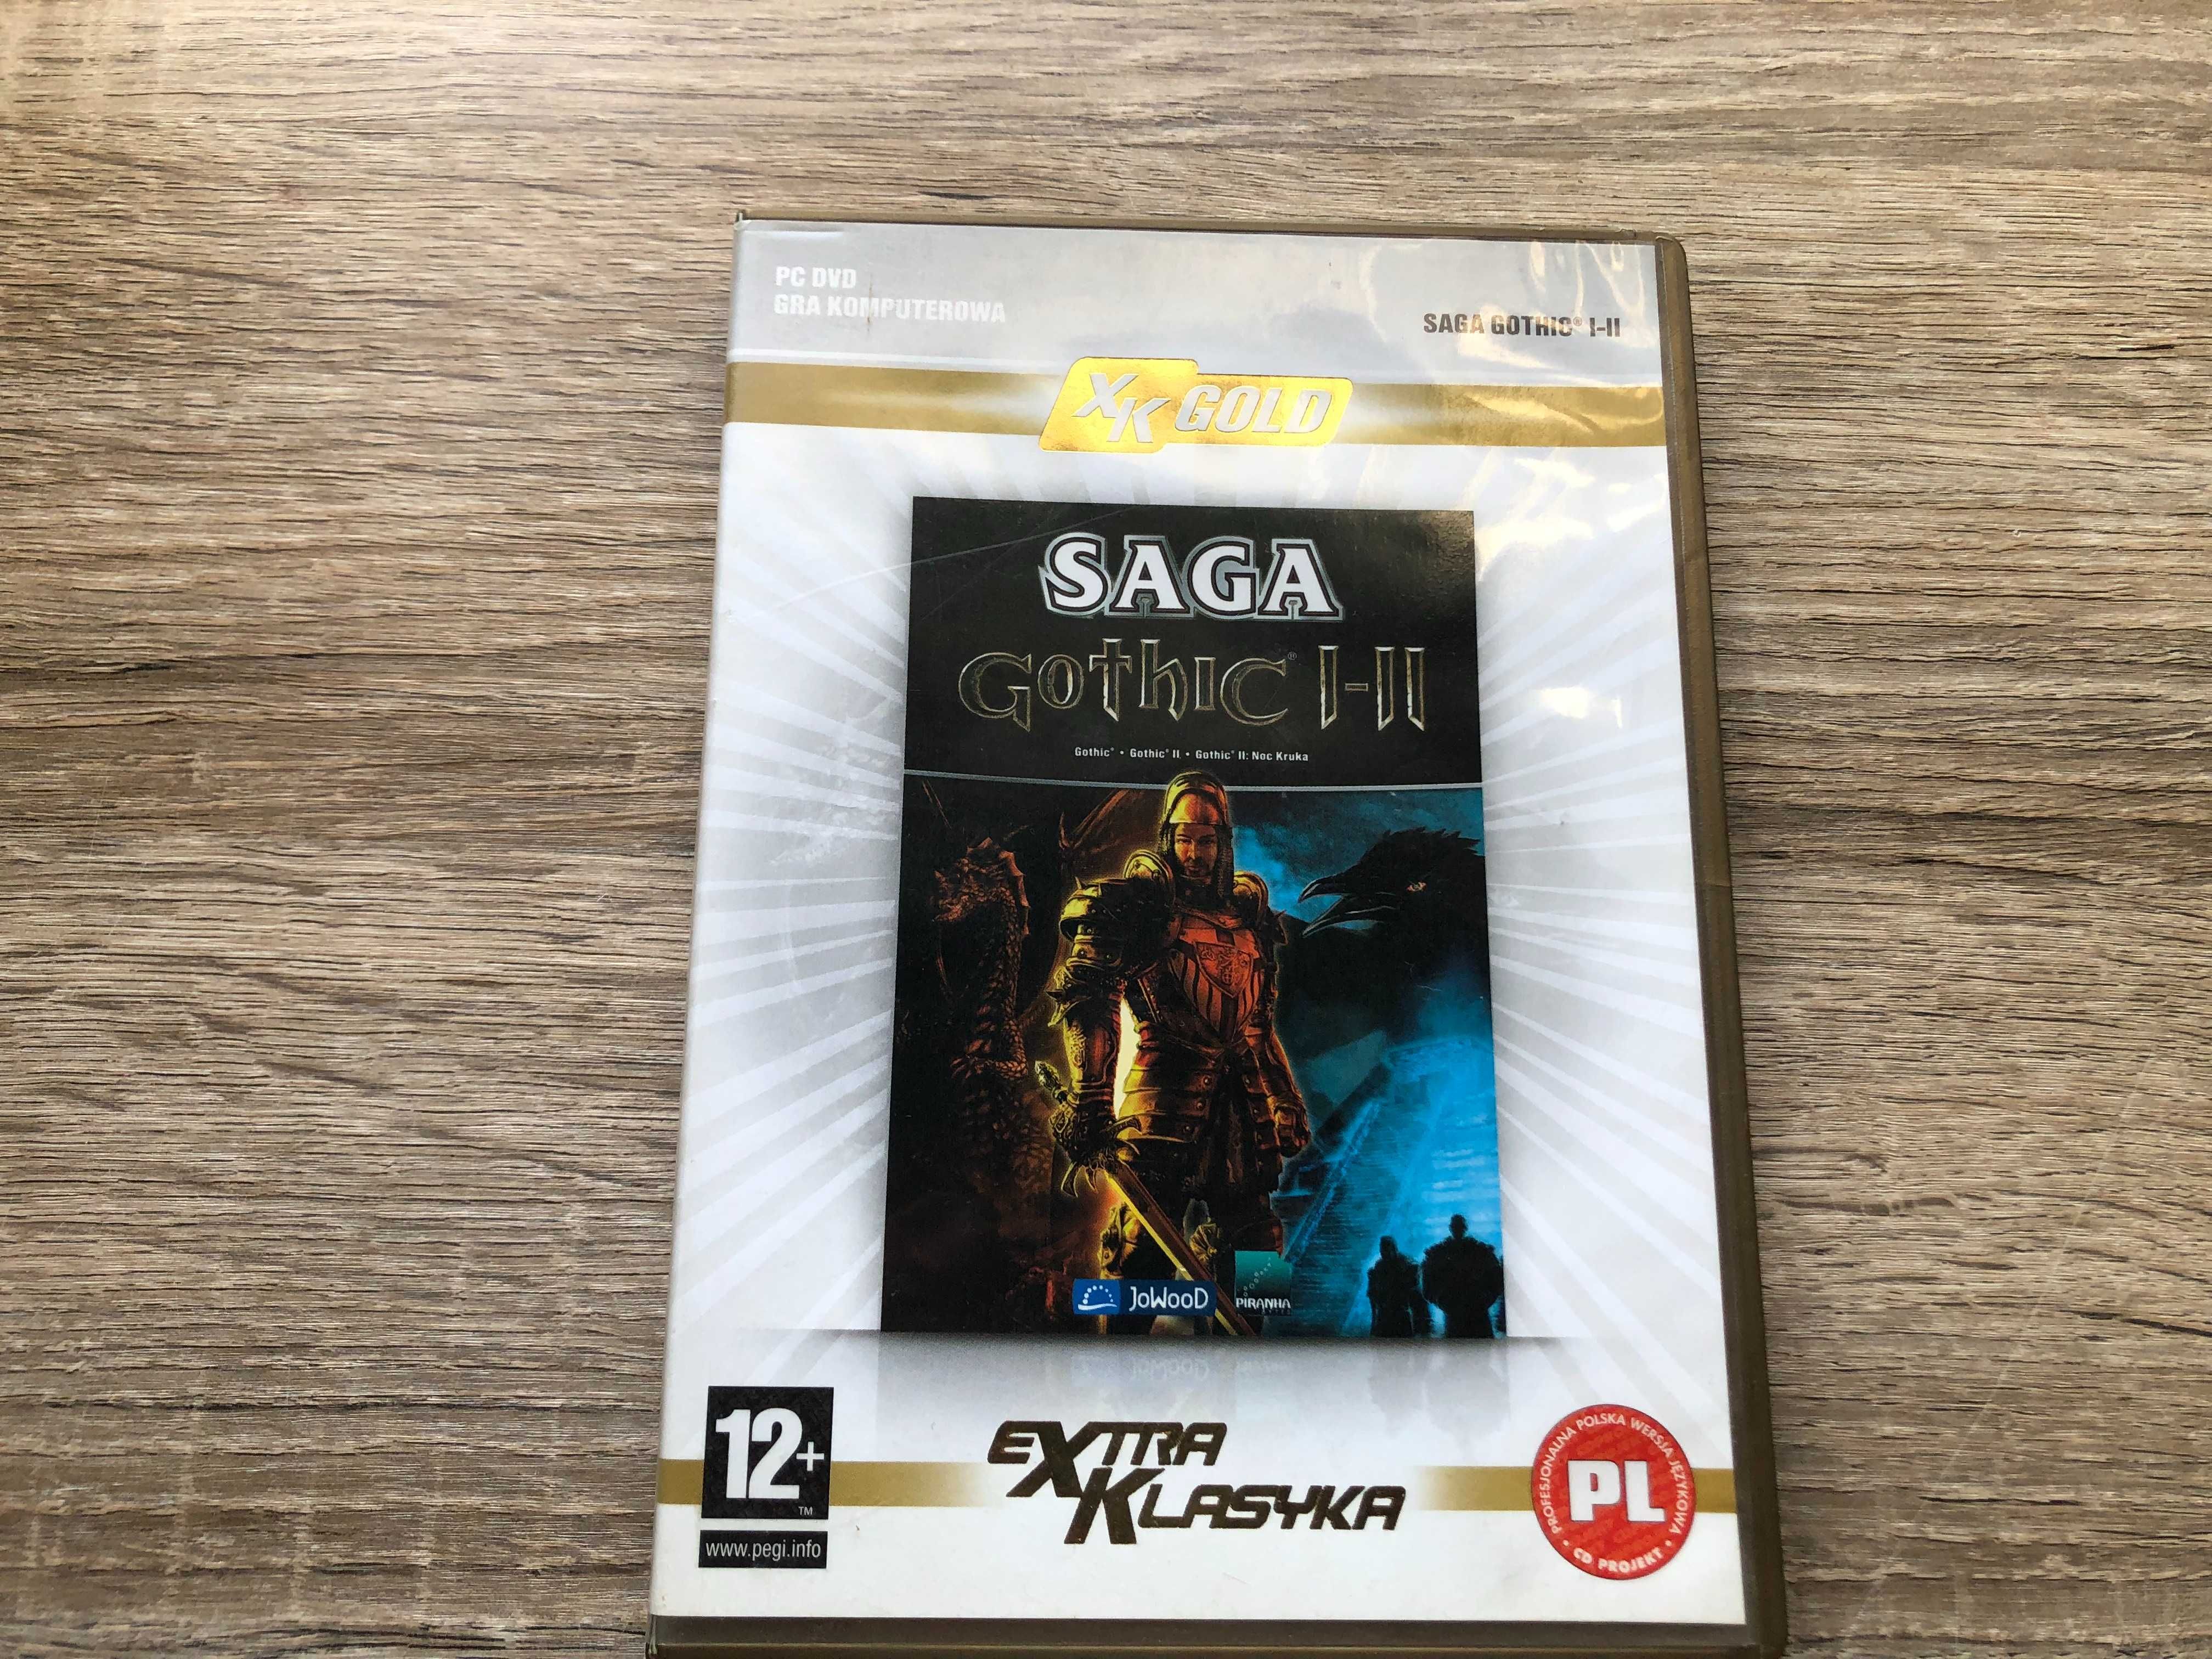 Saga Gothic I-II XK Gold Extra Klasyka gry na PC